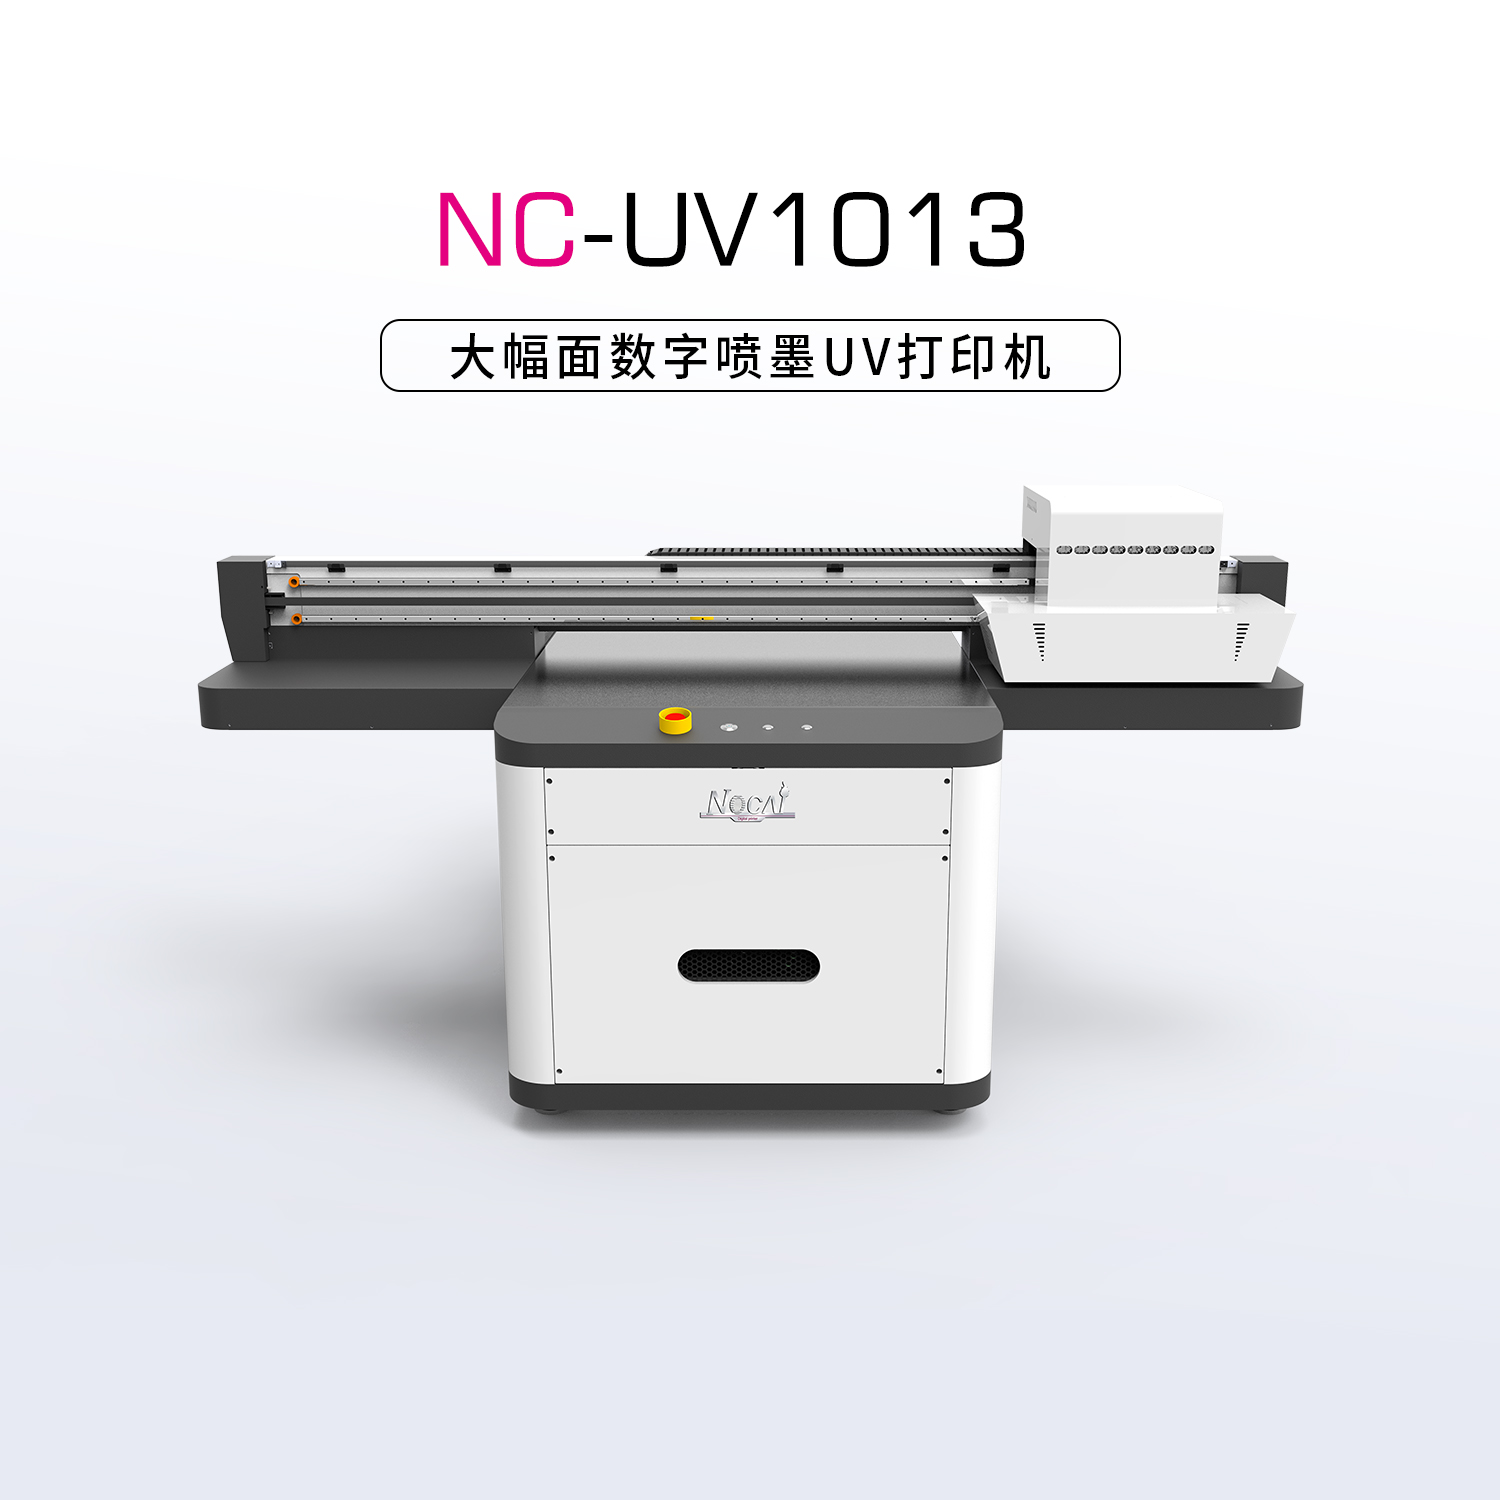 NC-UV1013-中大型UV平板打印机